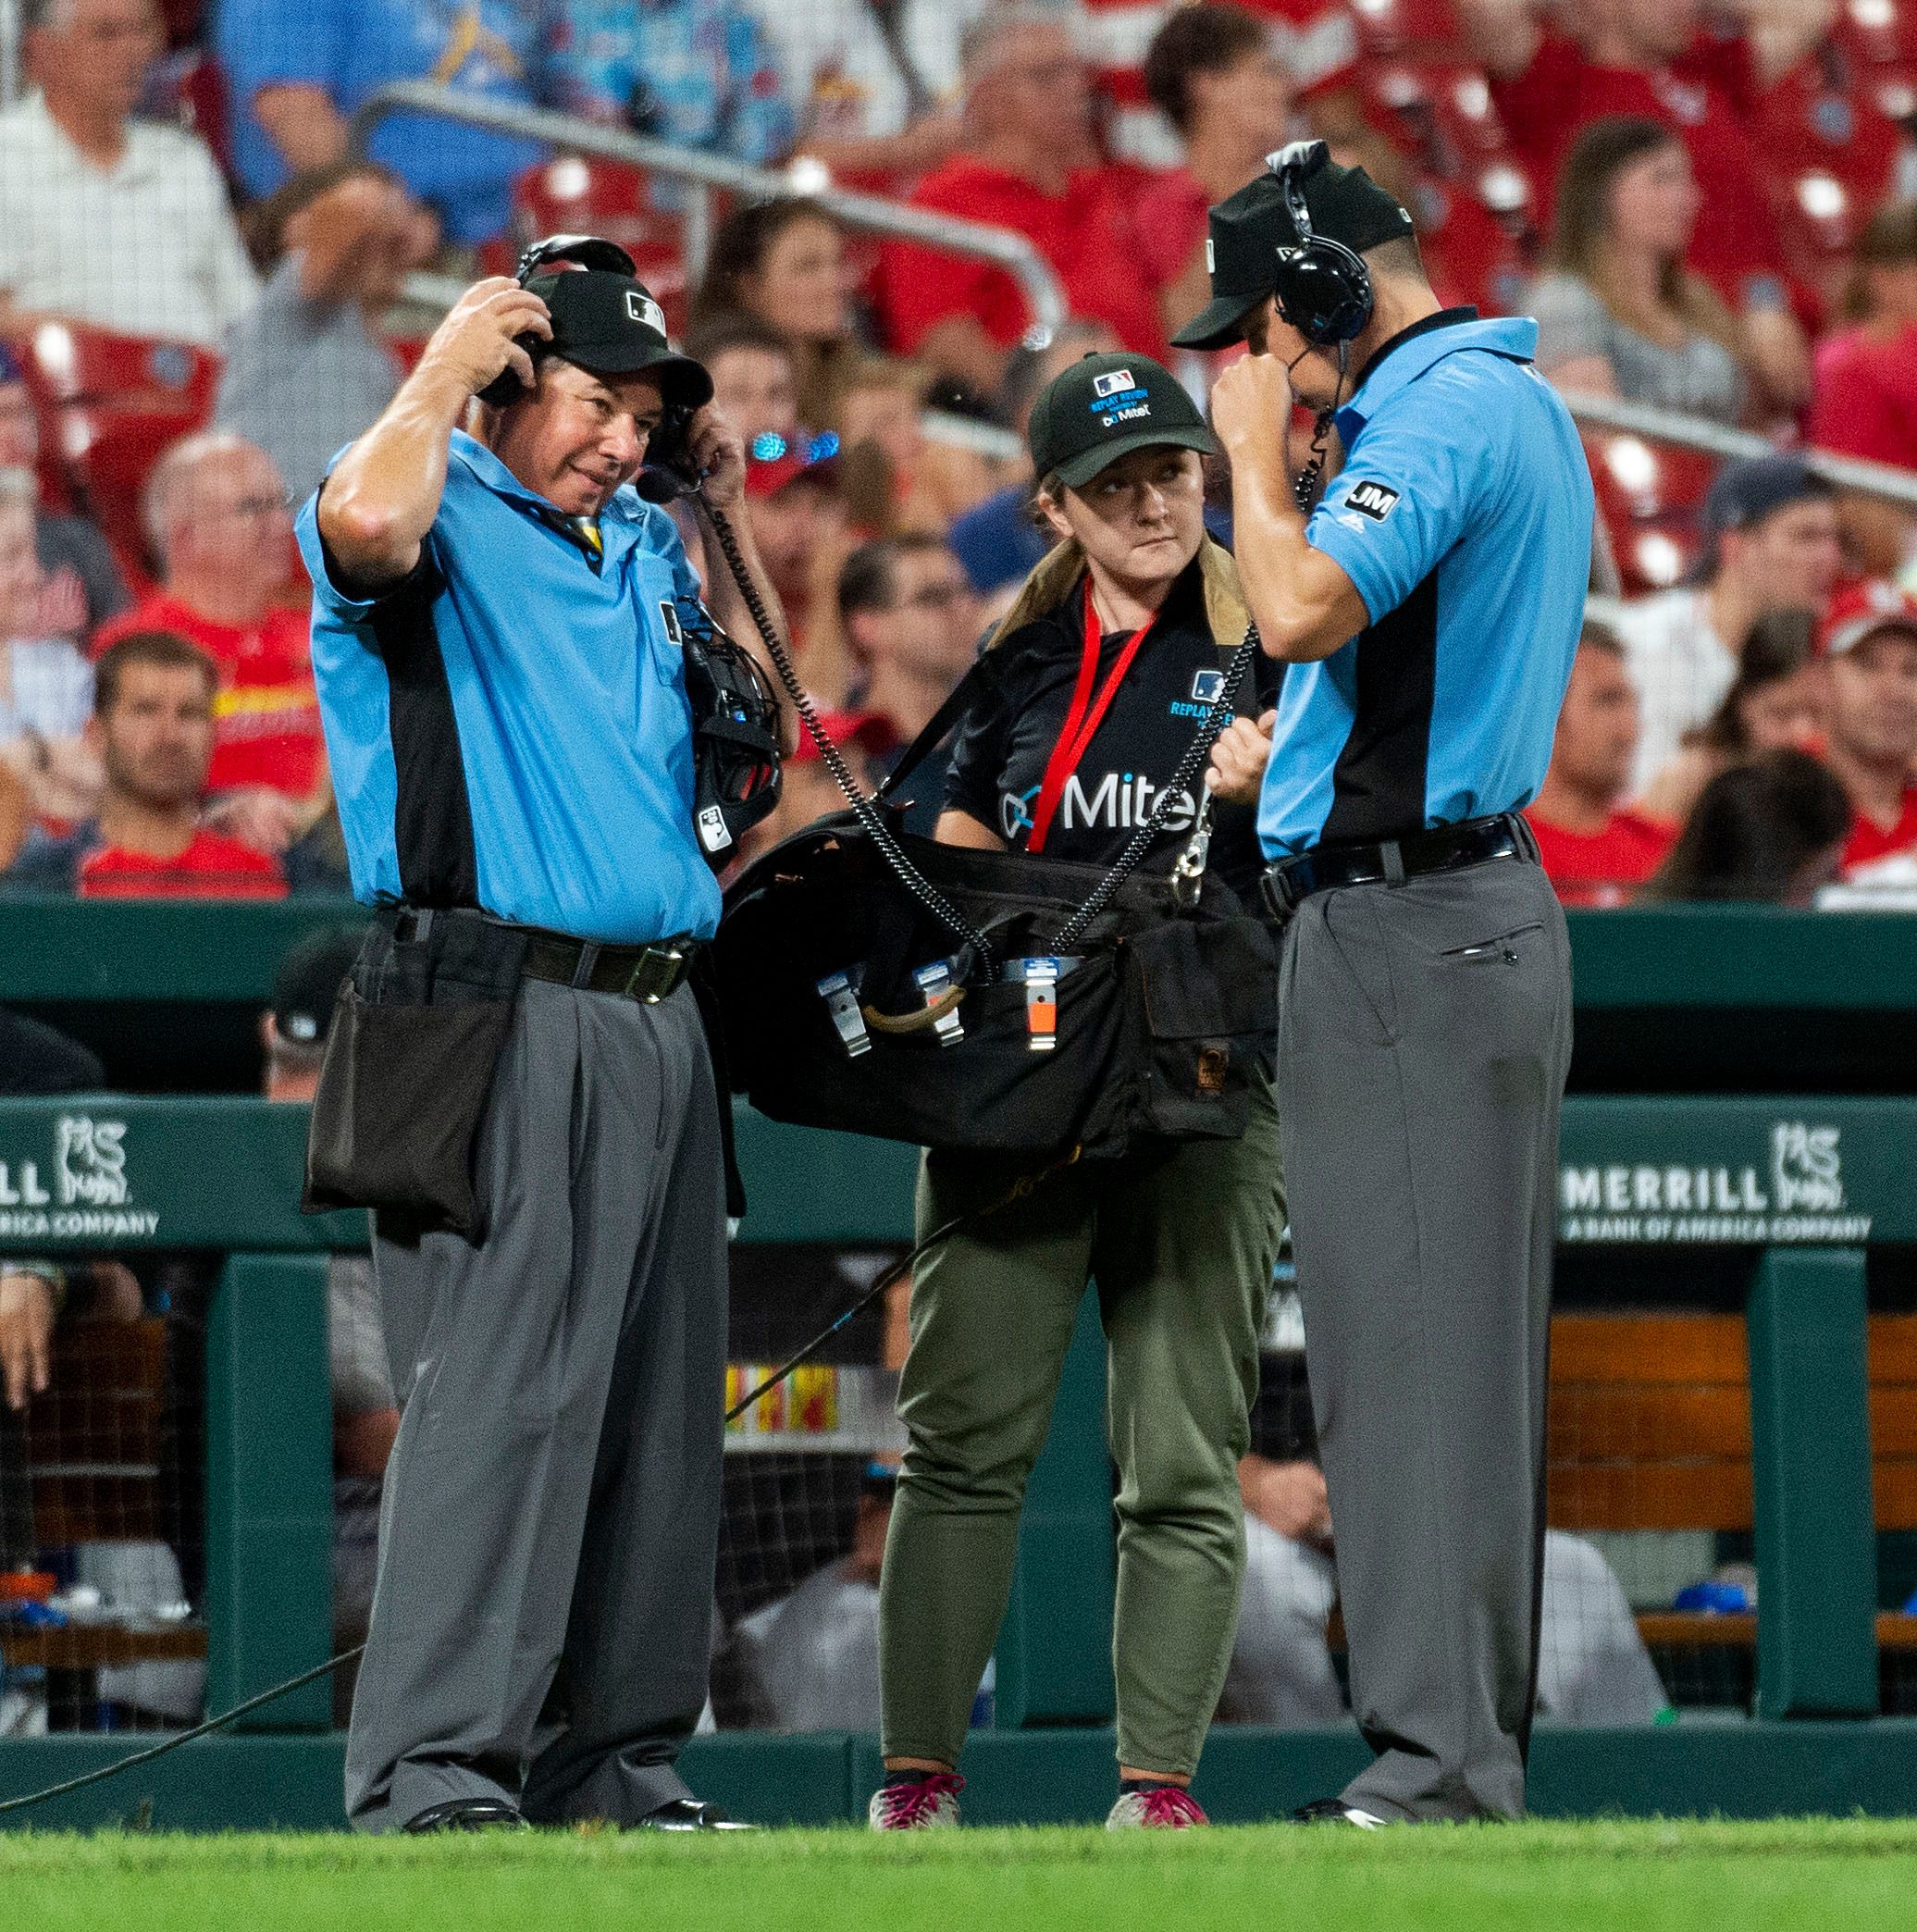 MLB Umpire Hernandez blew calls losing World Series job